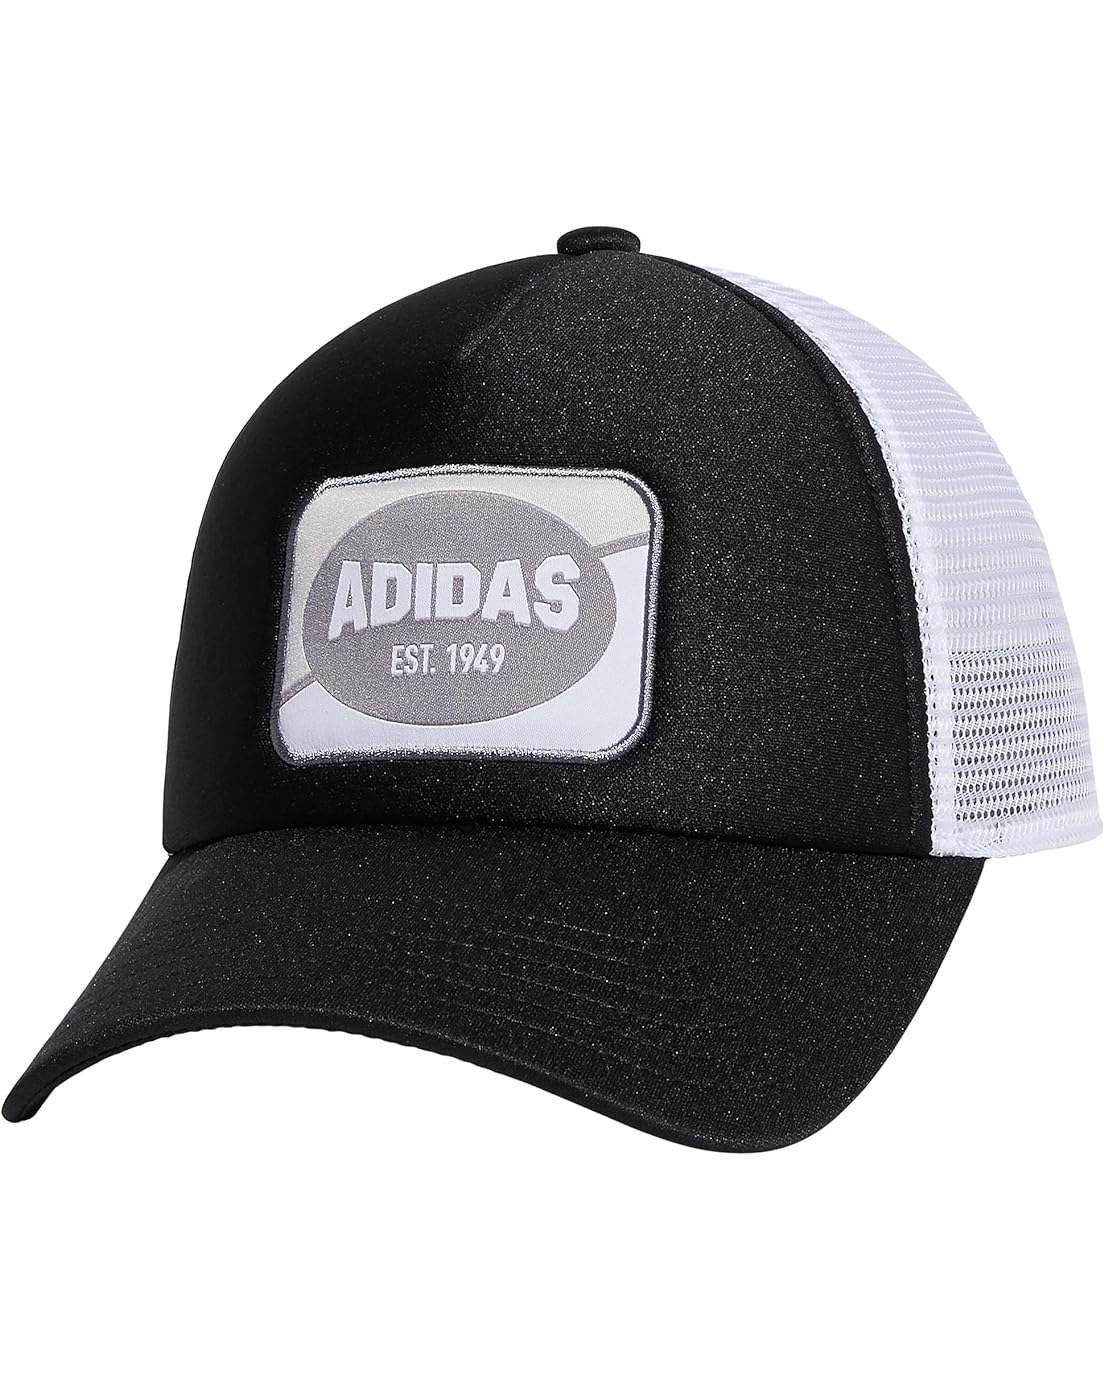 adidas Foam Front Snapback Adjustable Fit Trucker Hat